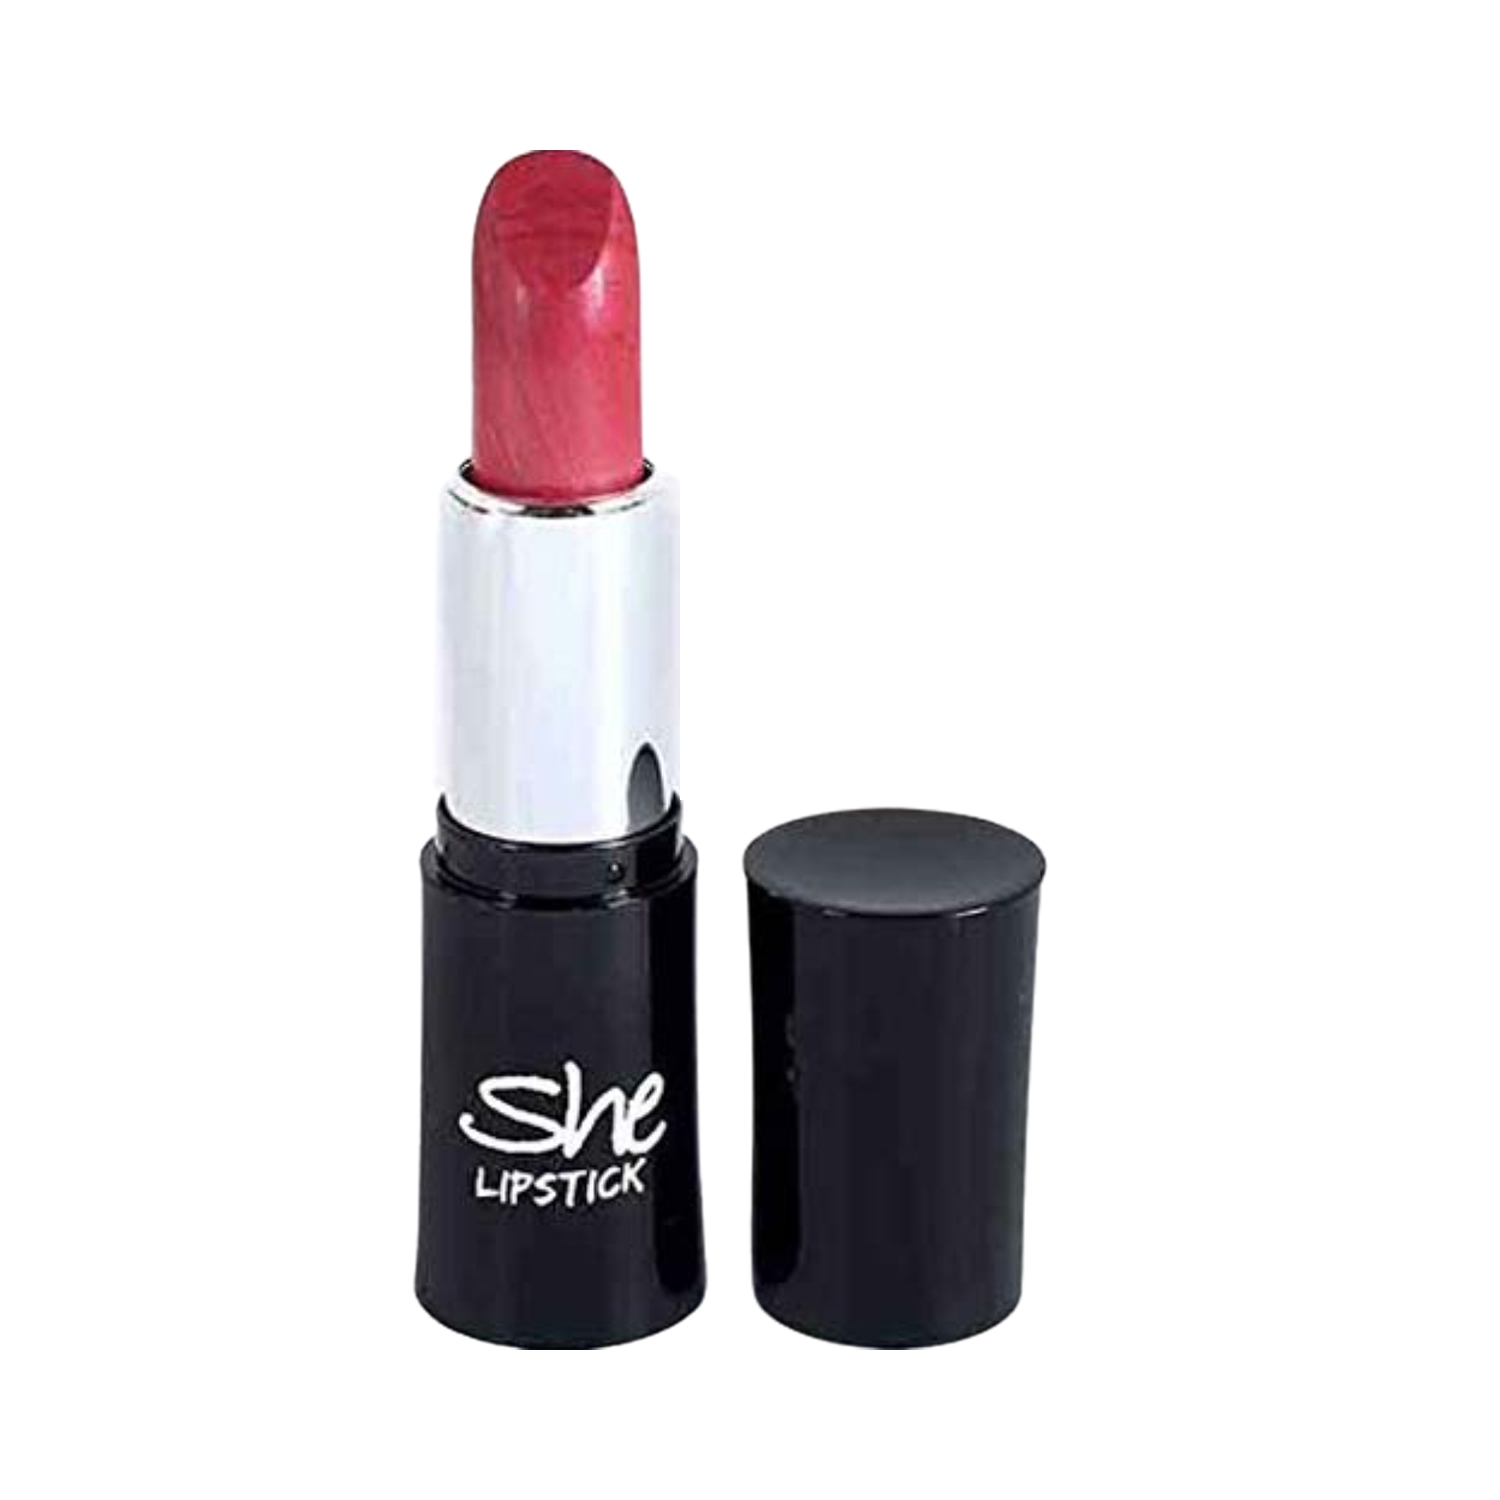 She | She Super Shine Lipstick - 09 Shade (4.5g)